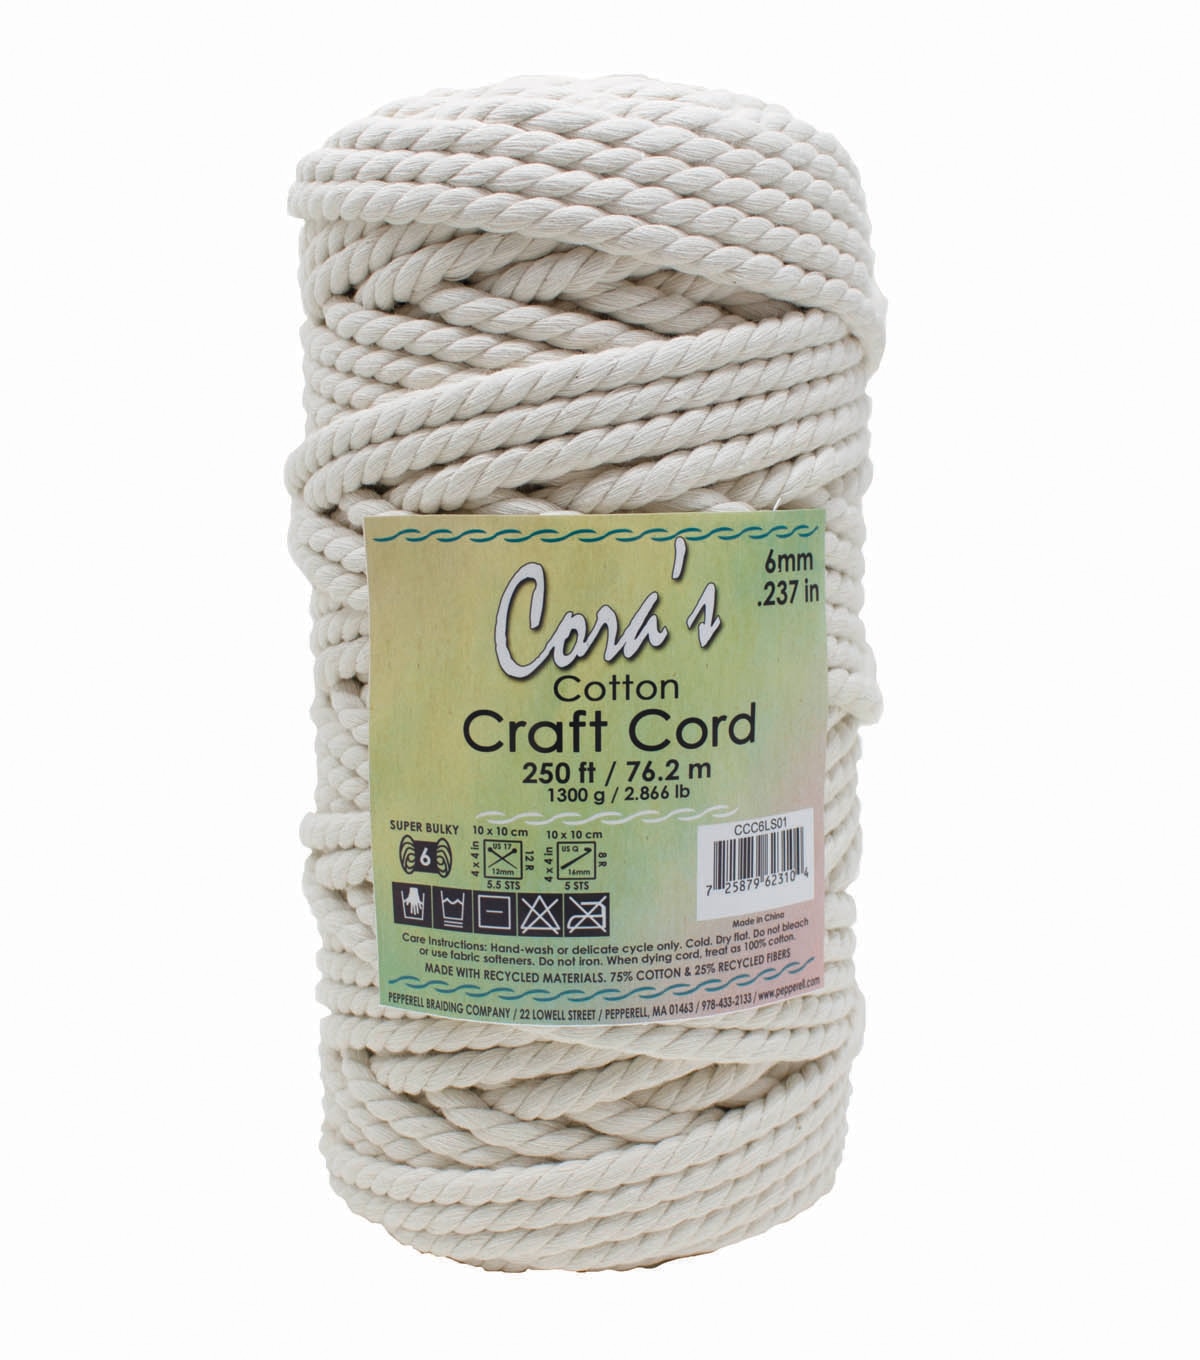 Cora's Cotton Craft Cord 4mm x 75ft Charcoal, SKU: CCC4 06